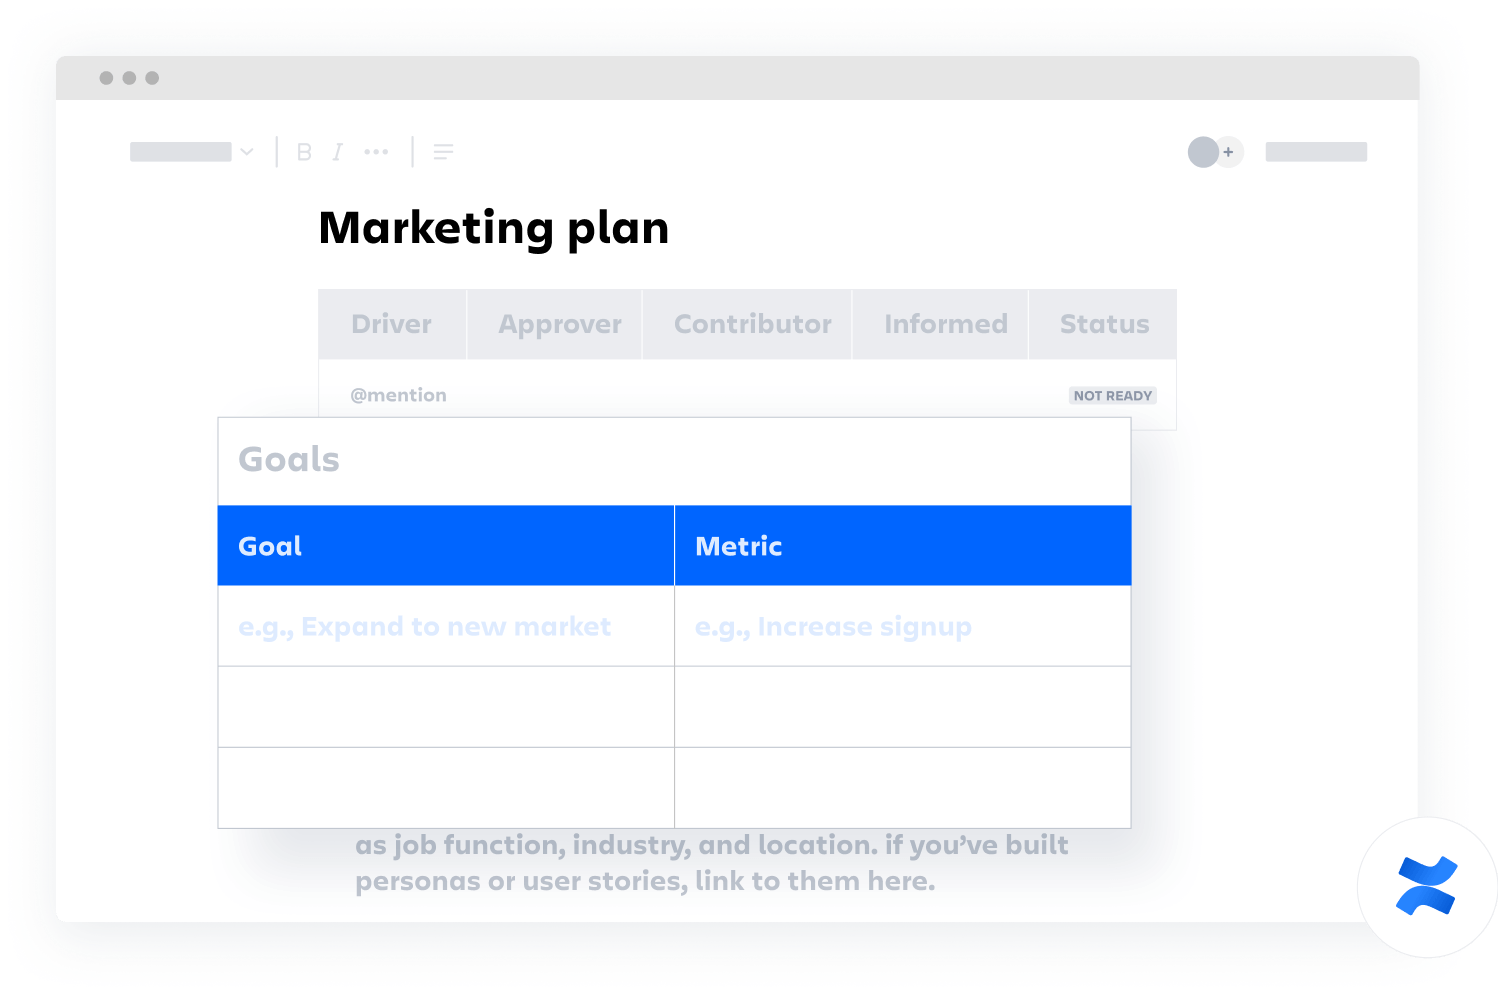 Plan marketingowy — szablon Confluence